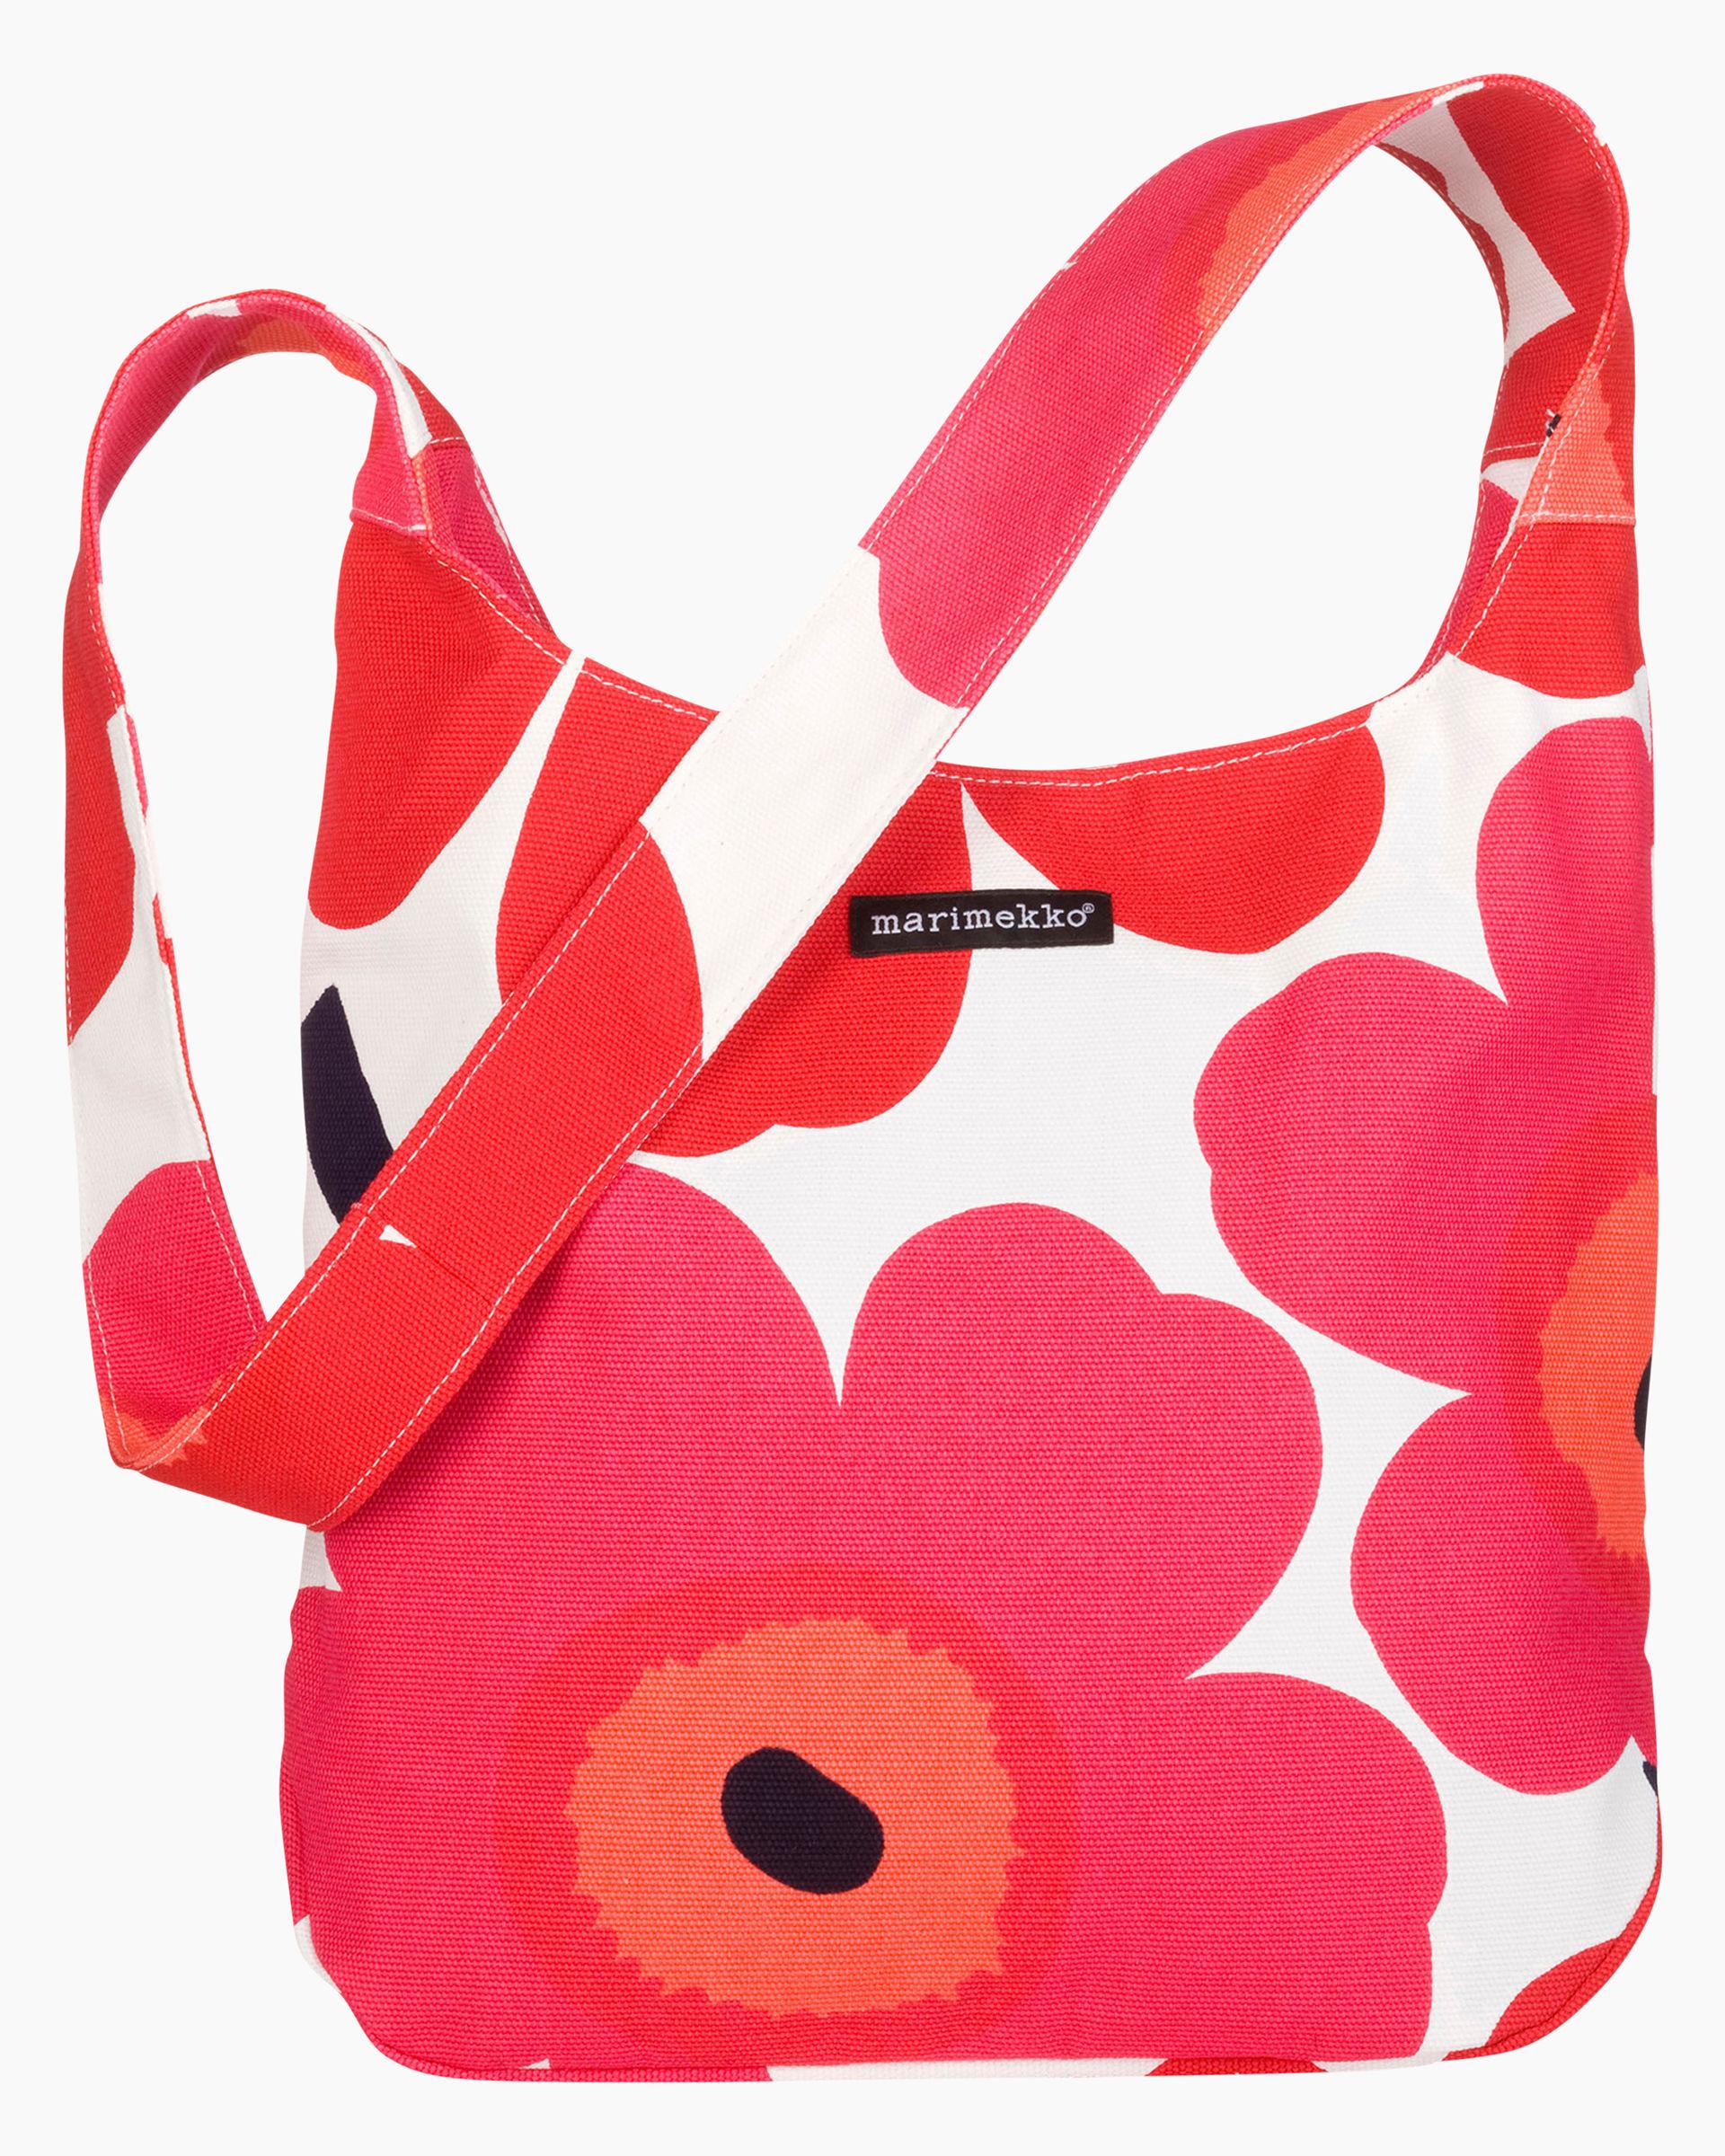 Marimekko Canvas 40% Final Sale Clover Bag in White, Red (Red) - Lyst